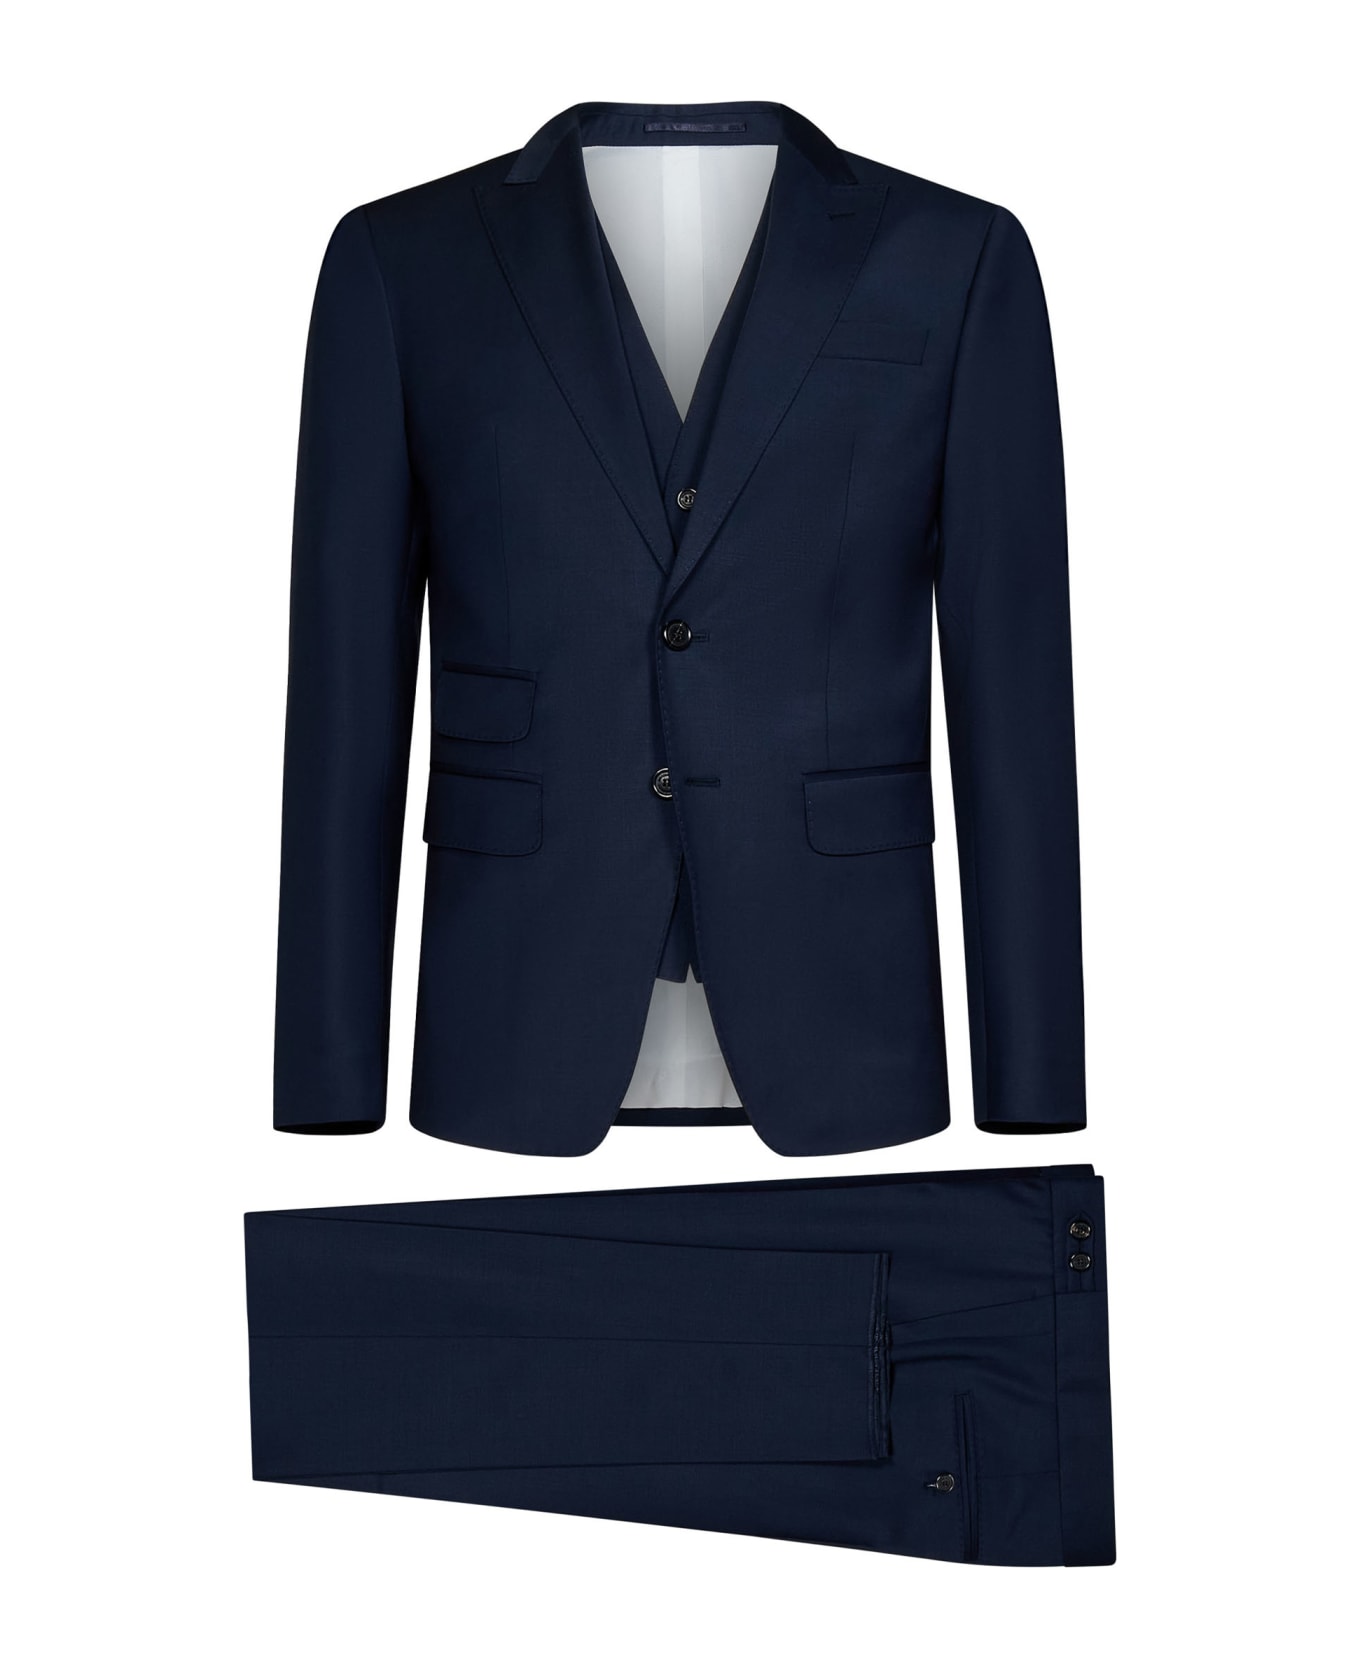 Dsquared2 London Suit - Midnight Blue